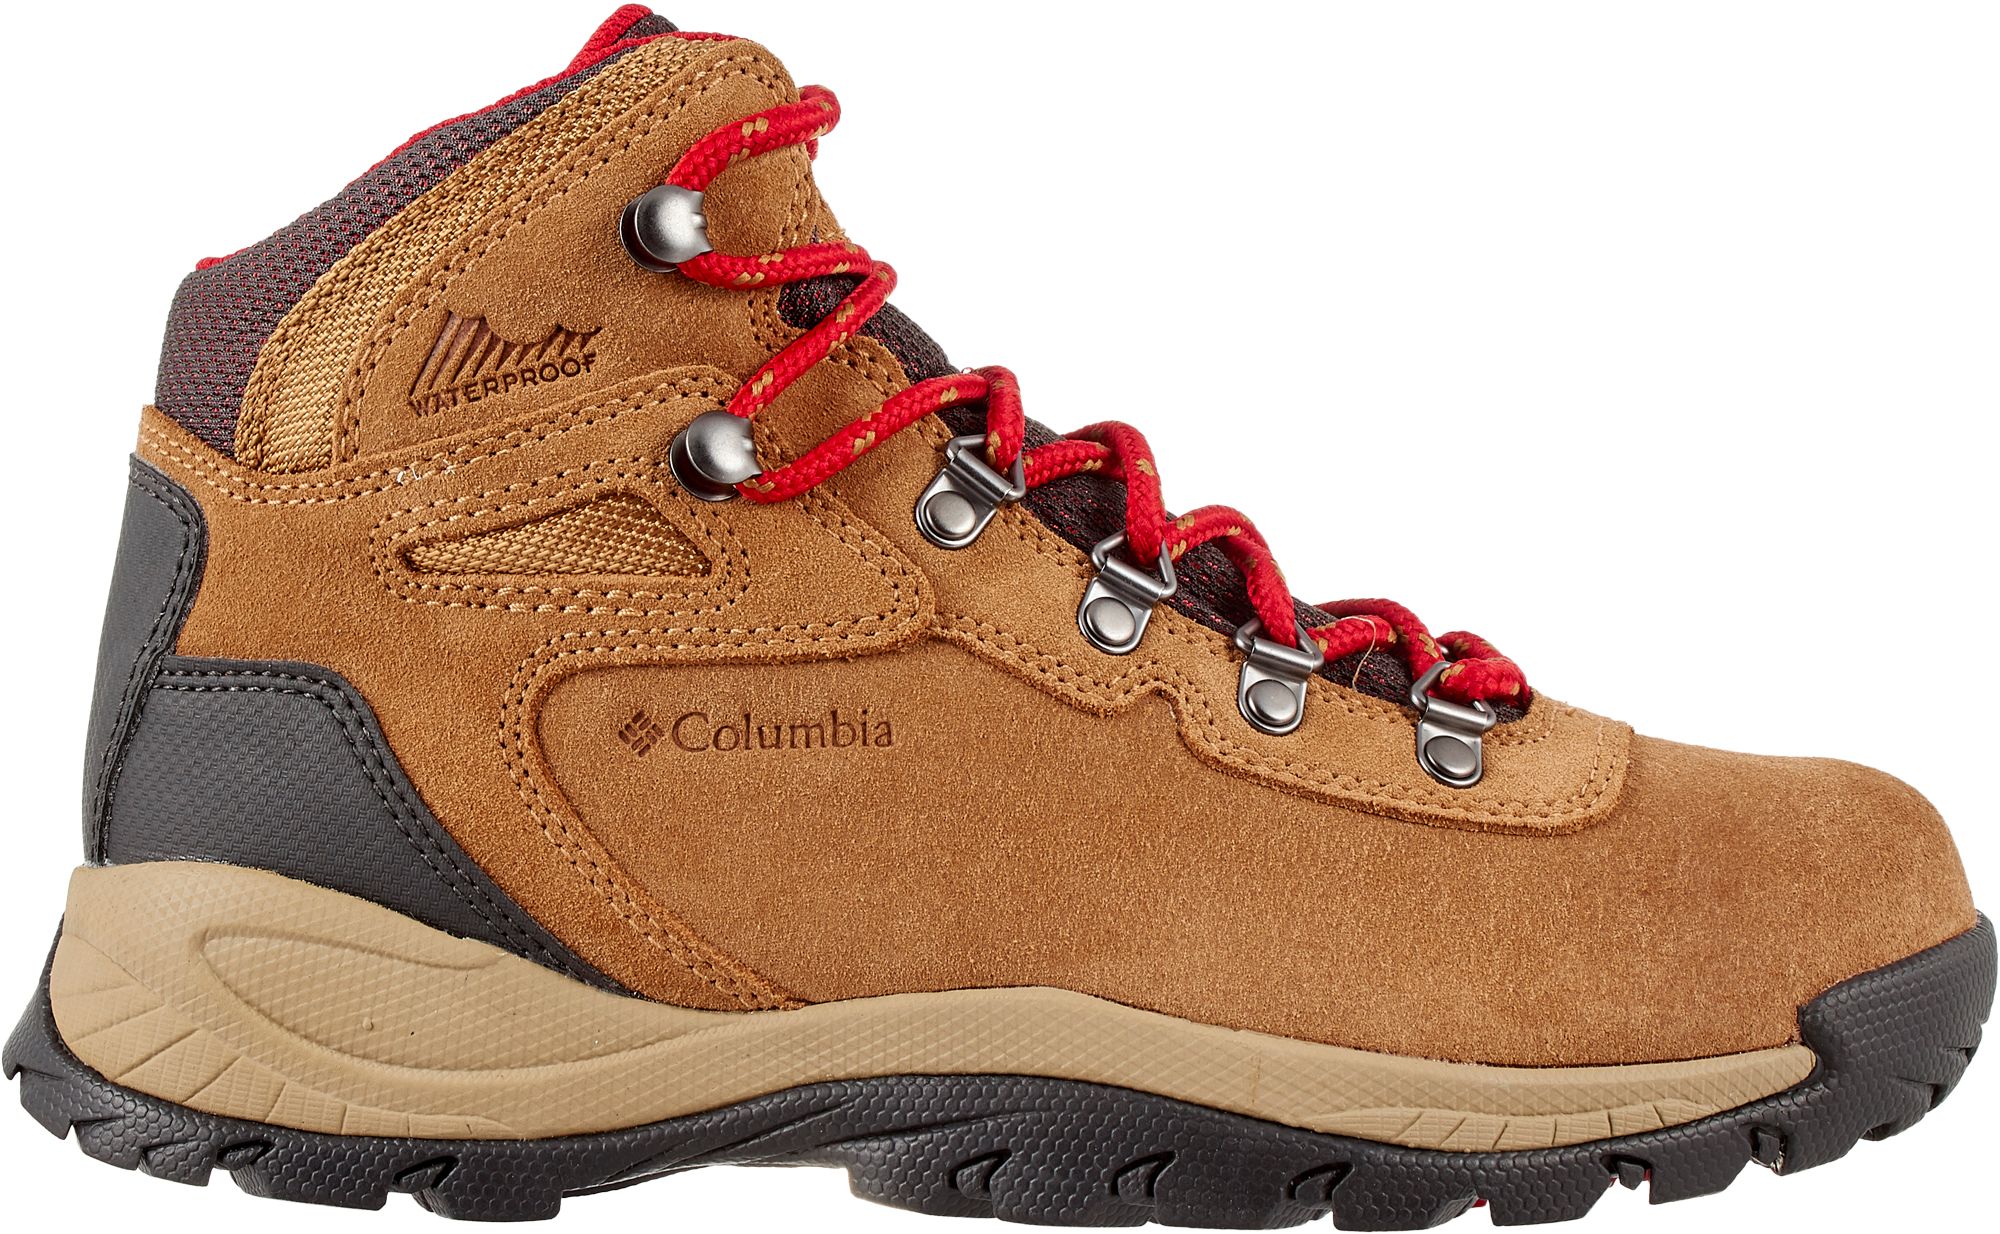 Photos - Trekking Shoes Columbia Women's Newton Ridge Plus Amped Waterproof Hiking Boots, Size 6.5 